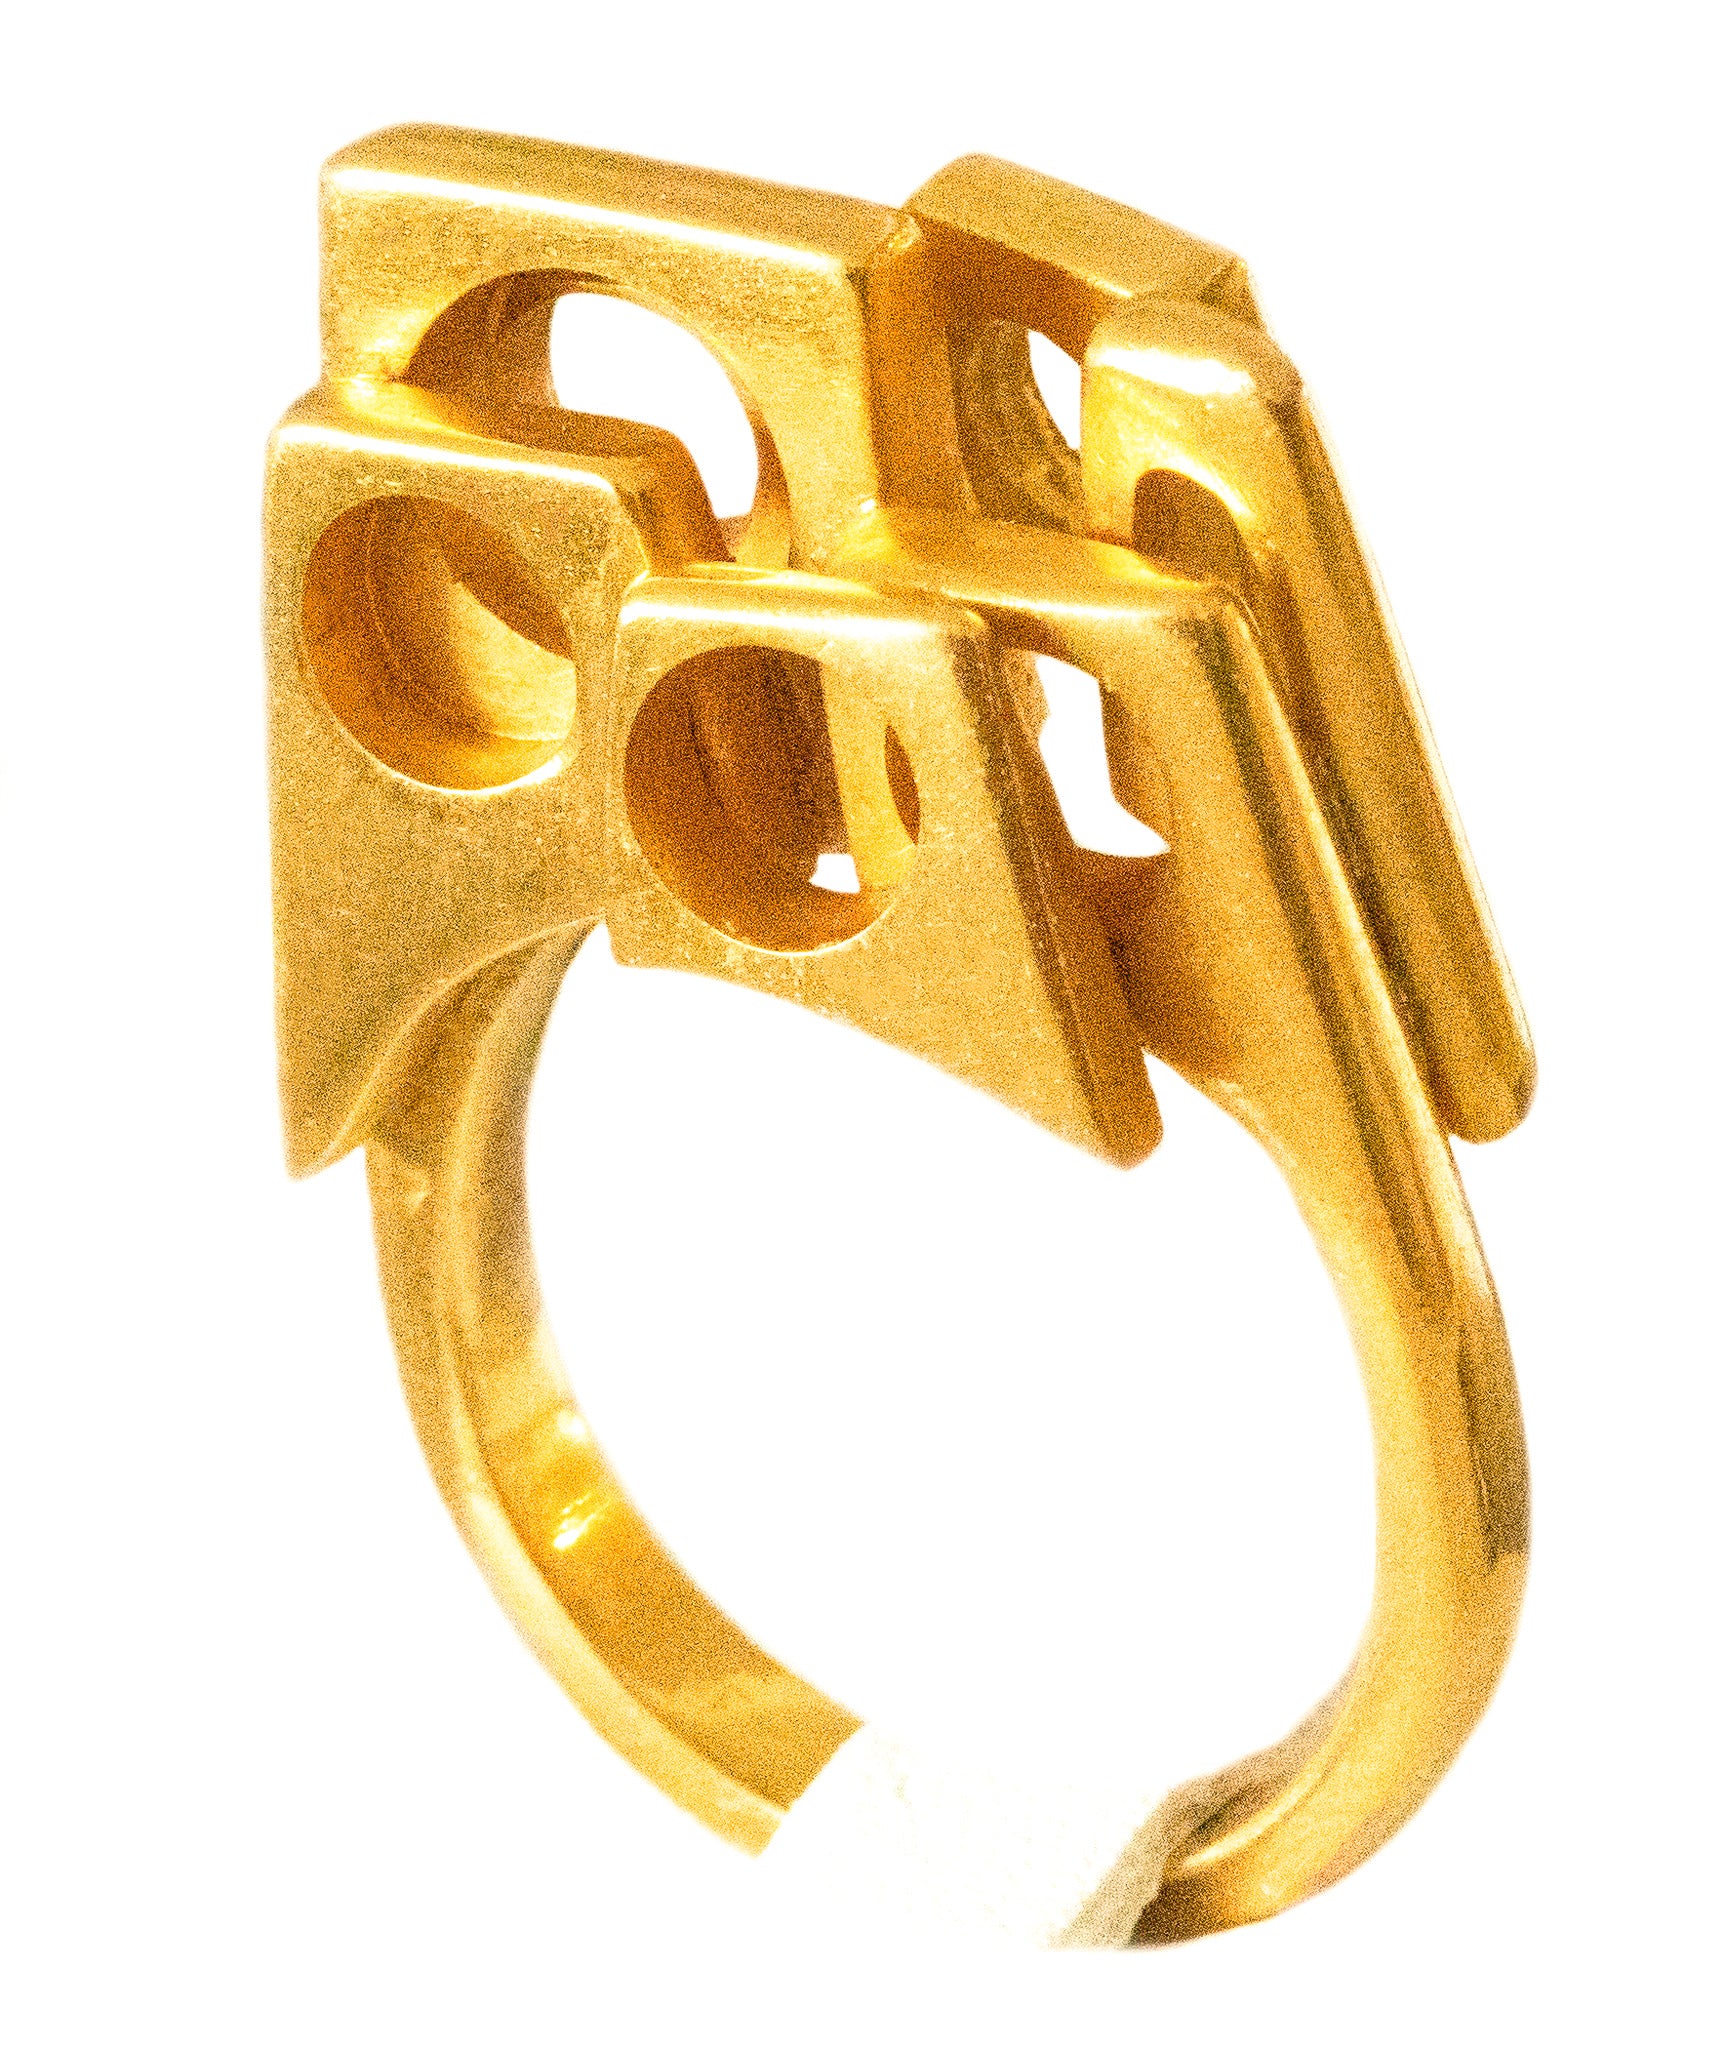 22Kt Gold Meenakari Ring - Rilg27348 - US$ 504 - 22Kt Gold Meenakari Ring  is handcrafted with Meenakari color work in combination with filigree work